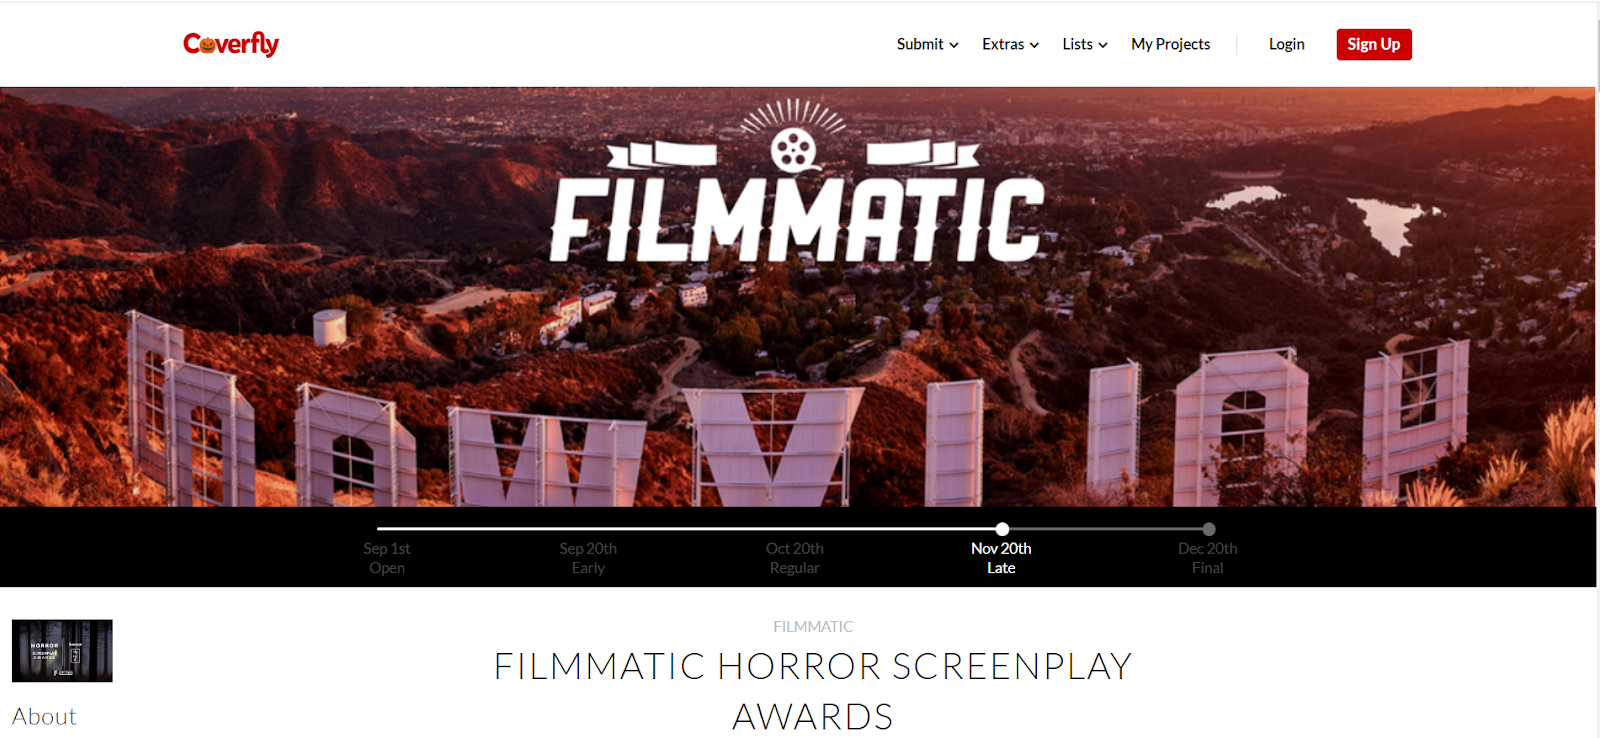 Filmmatic Horror Screenplay Horror Awards: